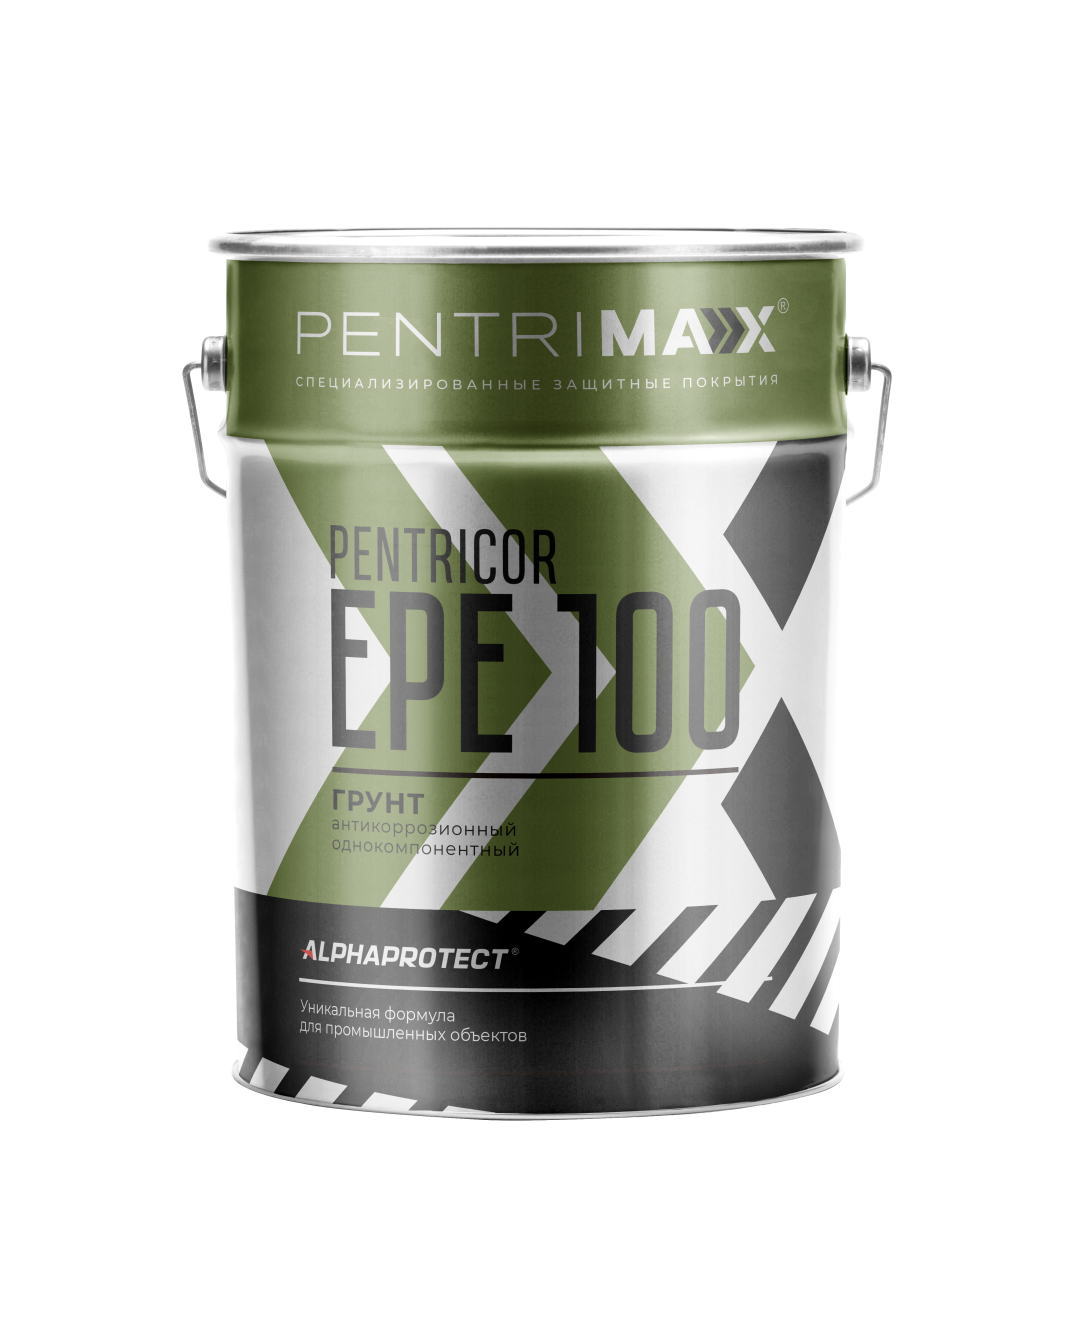 Эпоксидный грунт для бетона PENTRICOR EPE 100